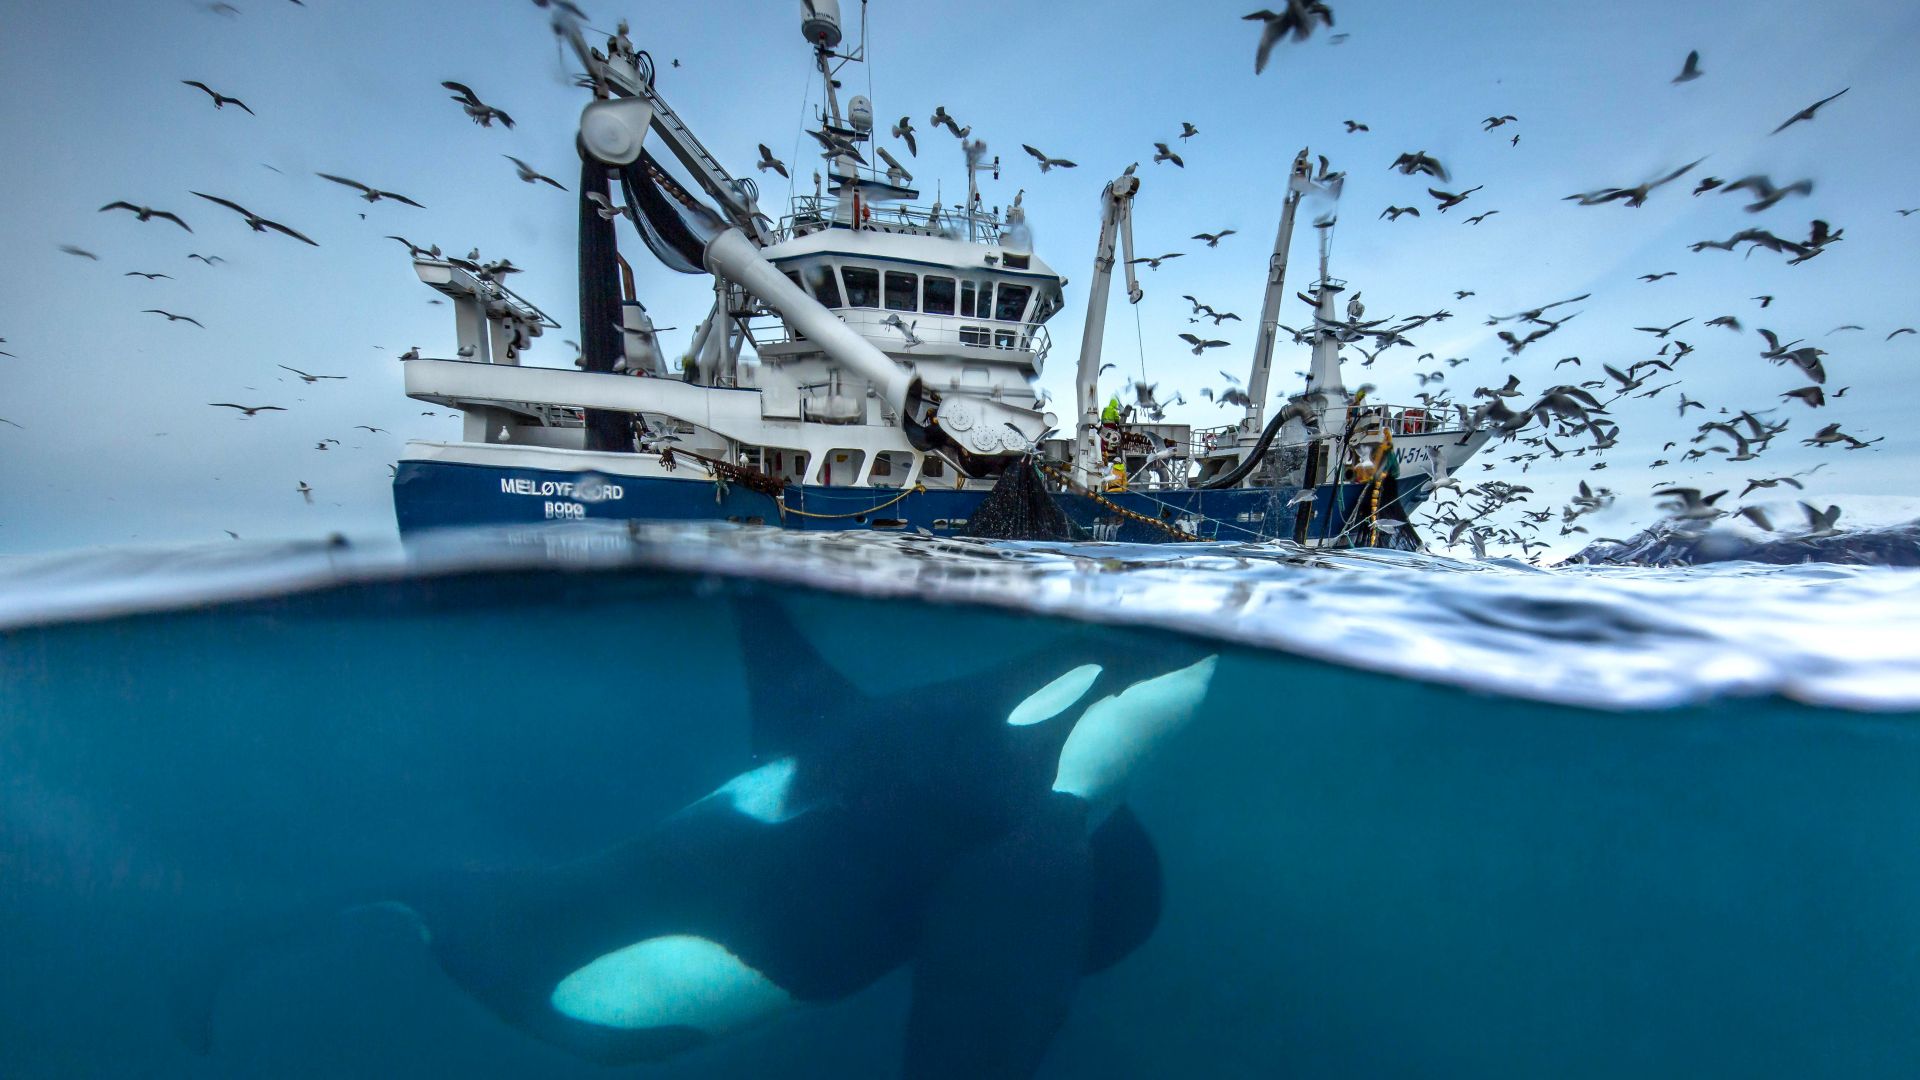 2016 Wildlife Photography finalist, whale, boat, birds, Norway, Ocean, underwater (horizontal)